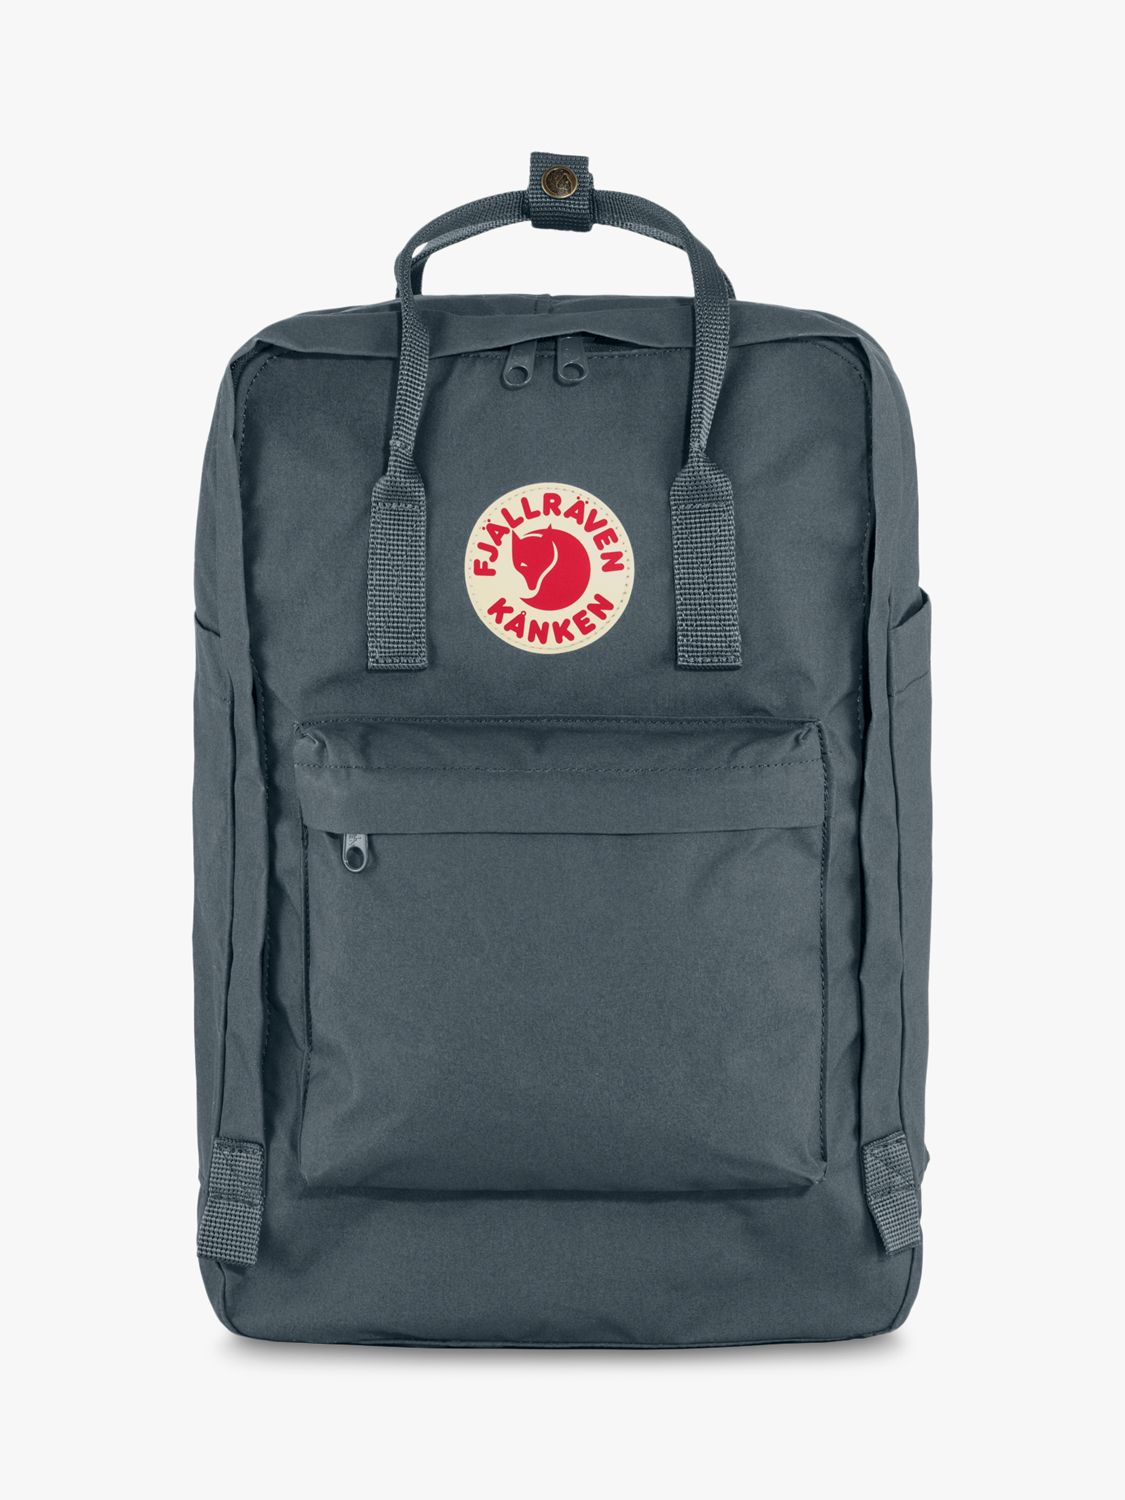 John Lewis Vancouver Water Resistant 15 Laptop Roll Top Backpack